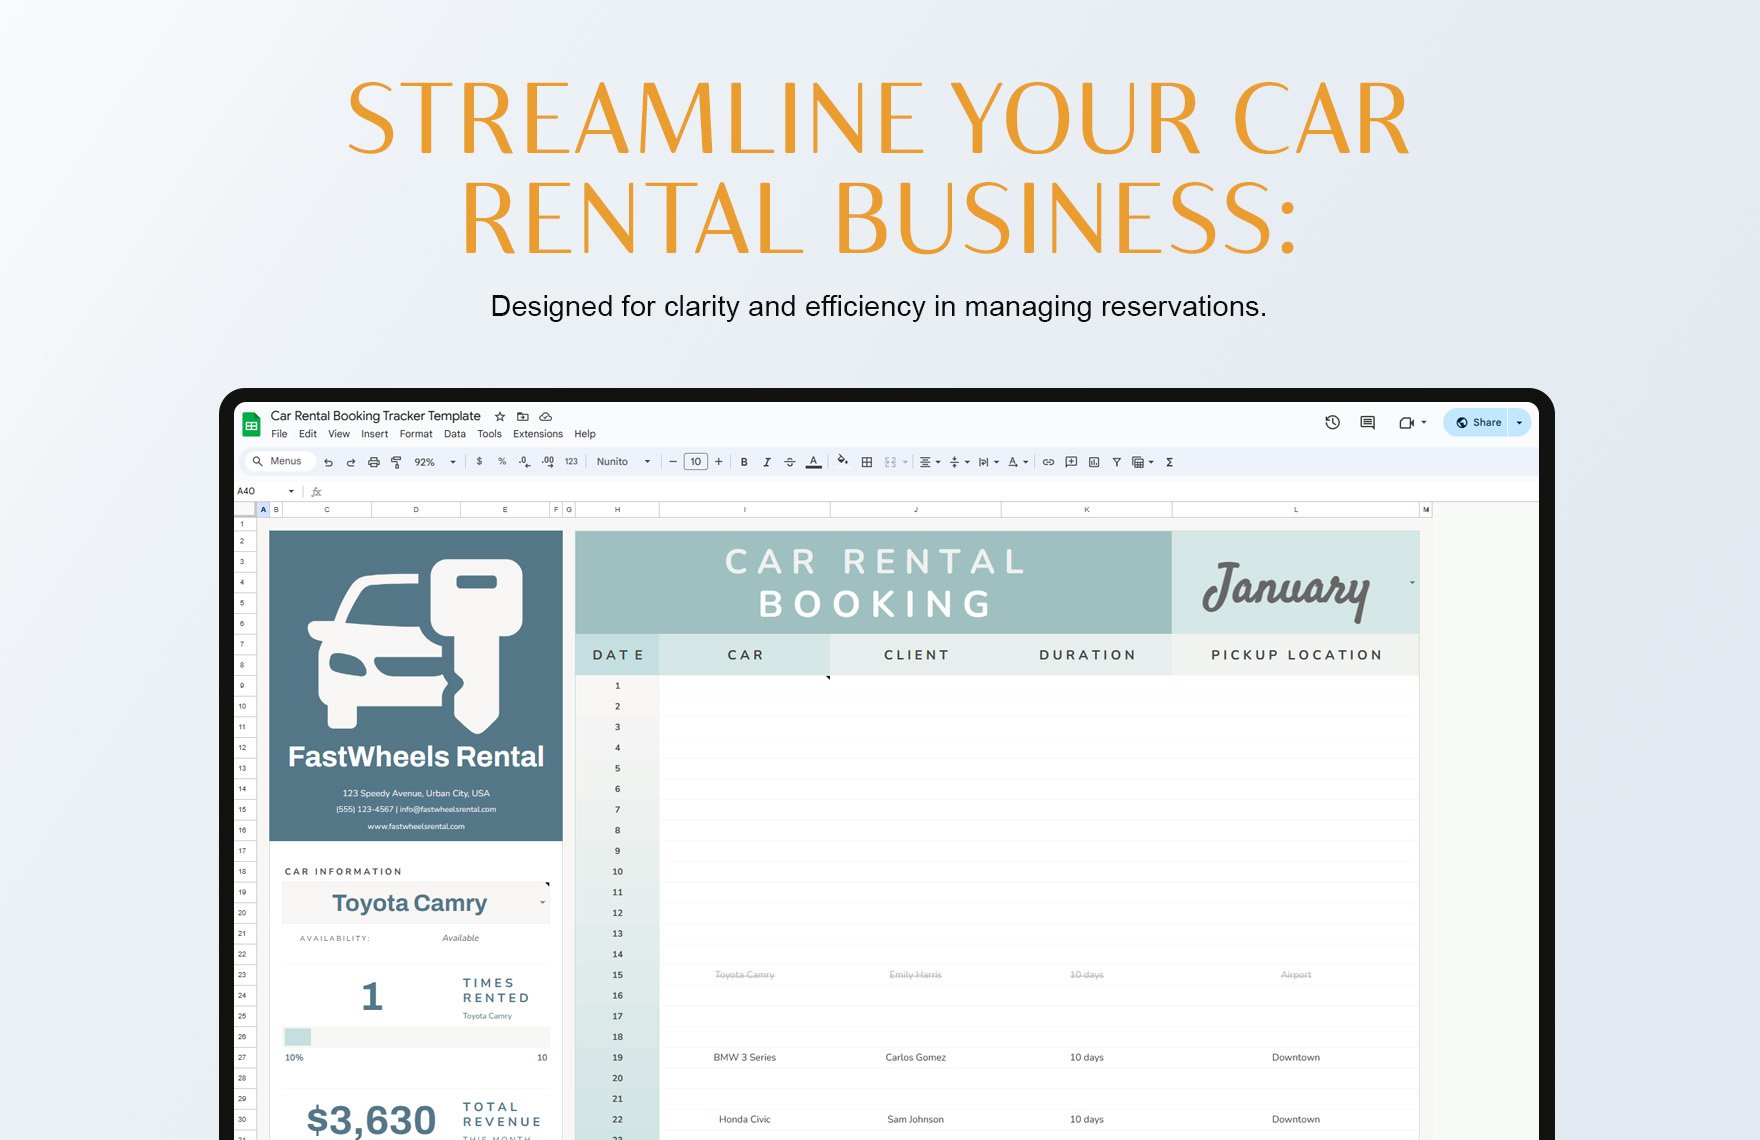 Car Rental Booking Tracker Template